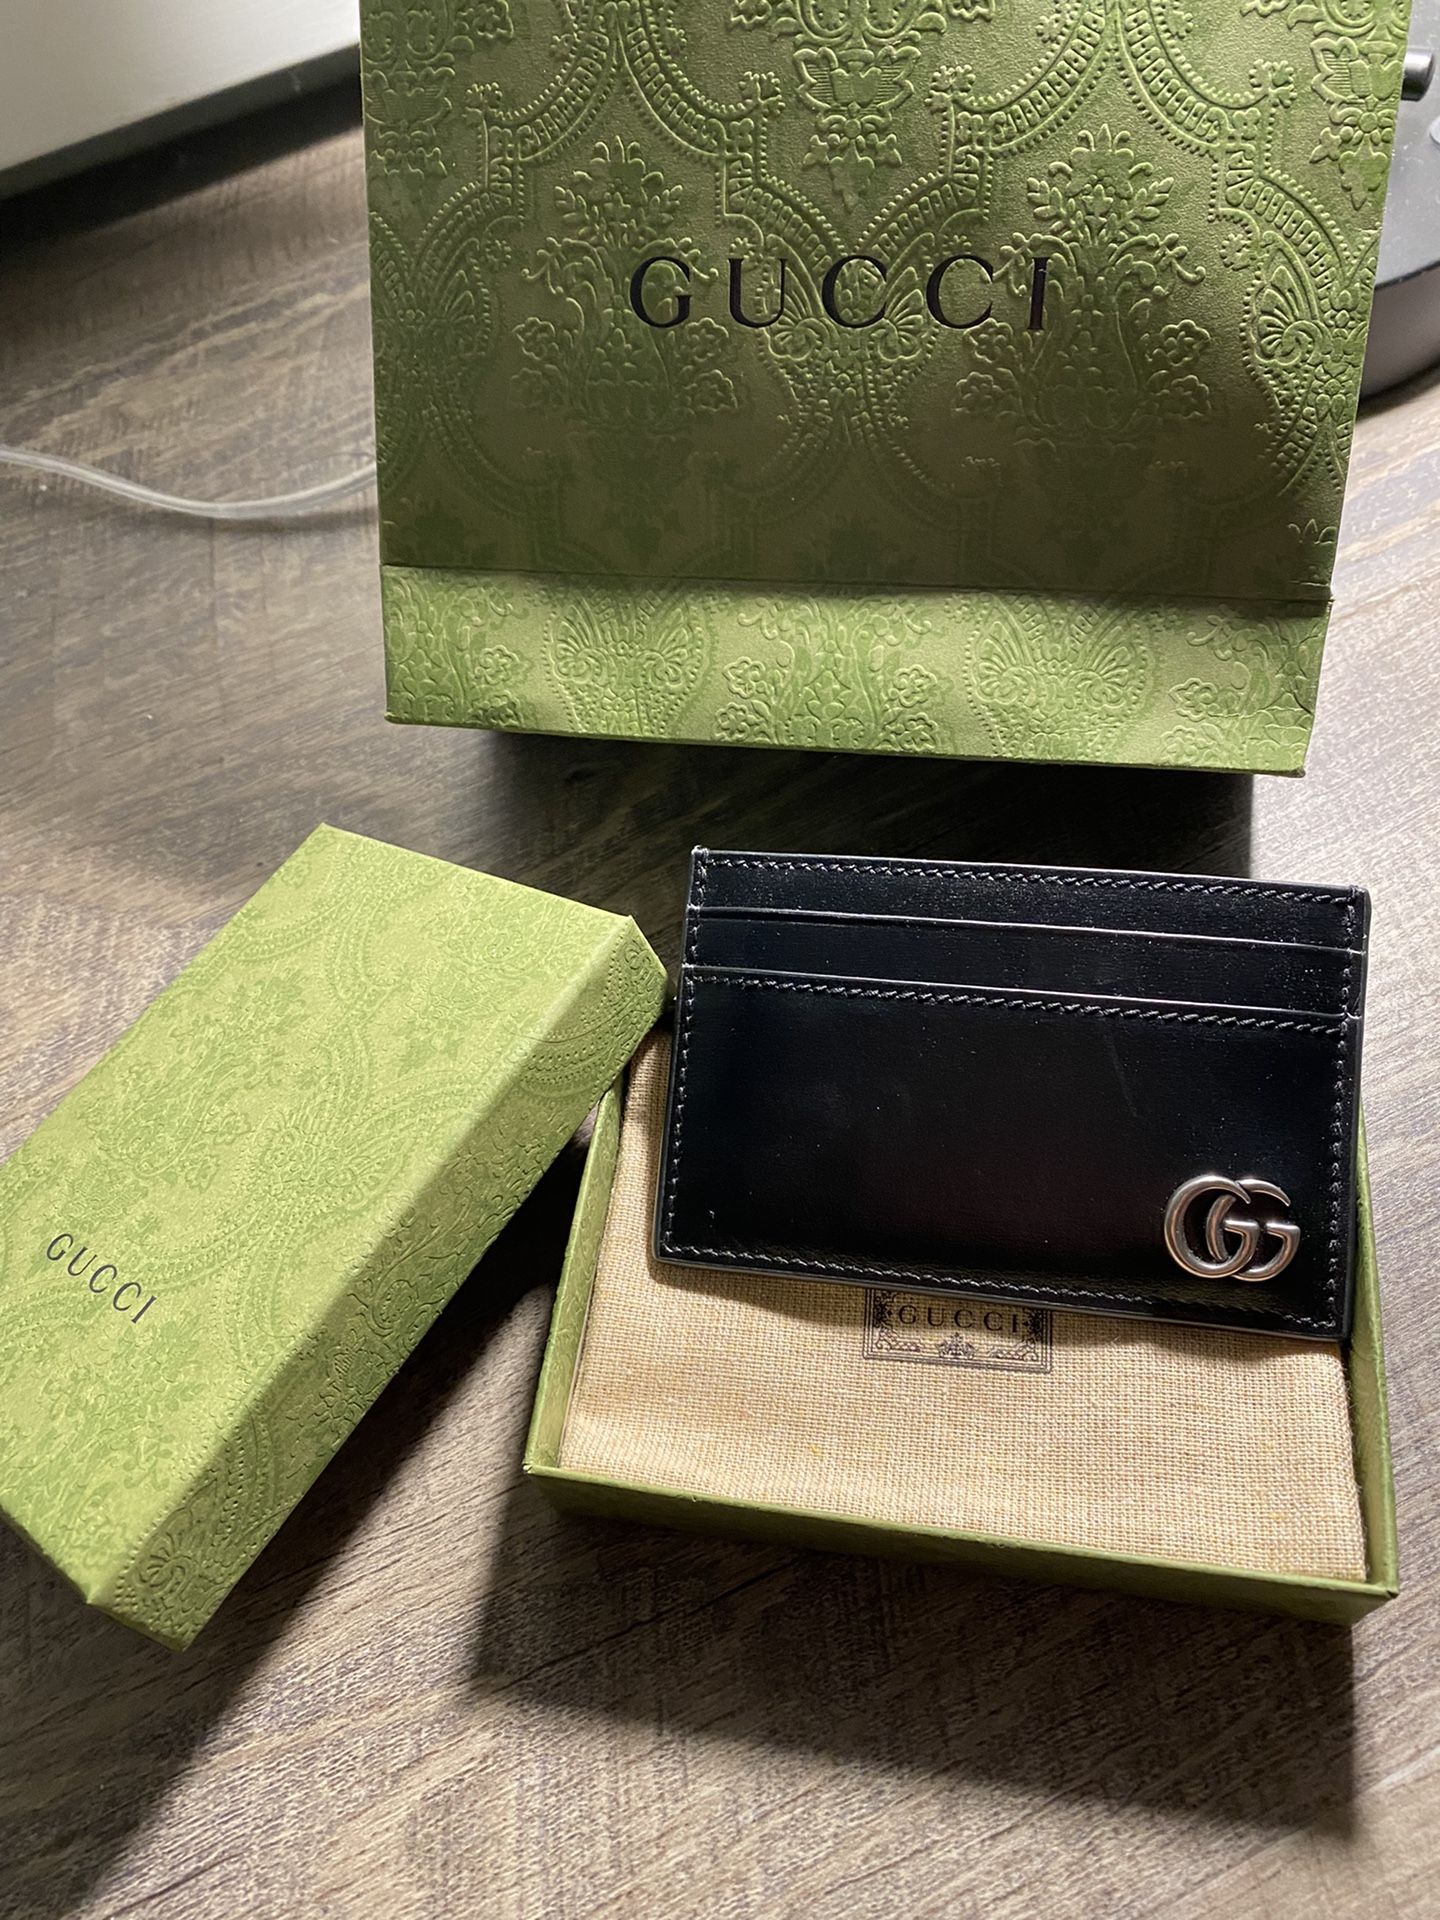 Gucci Card Wallet